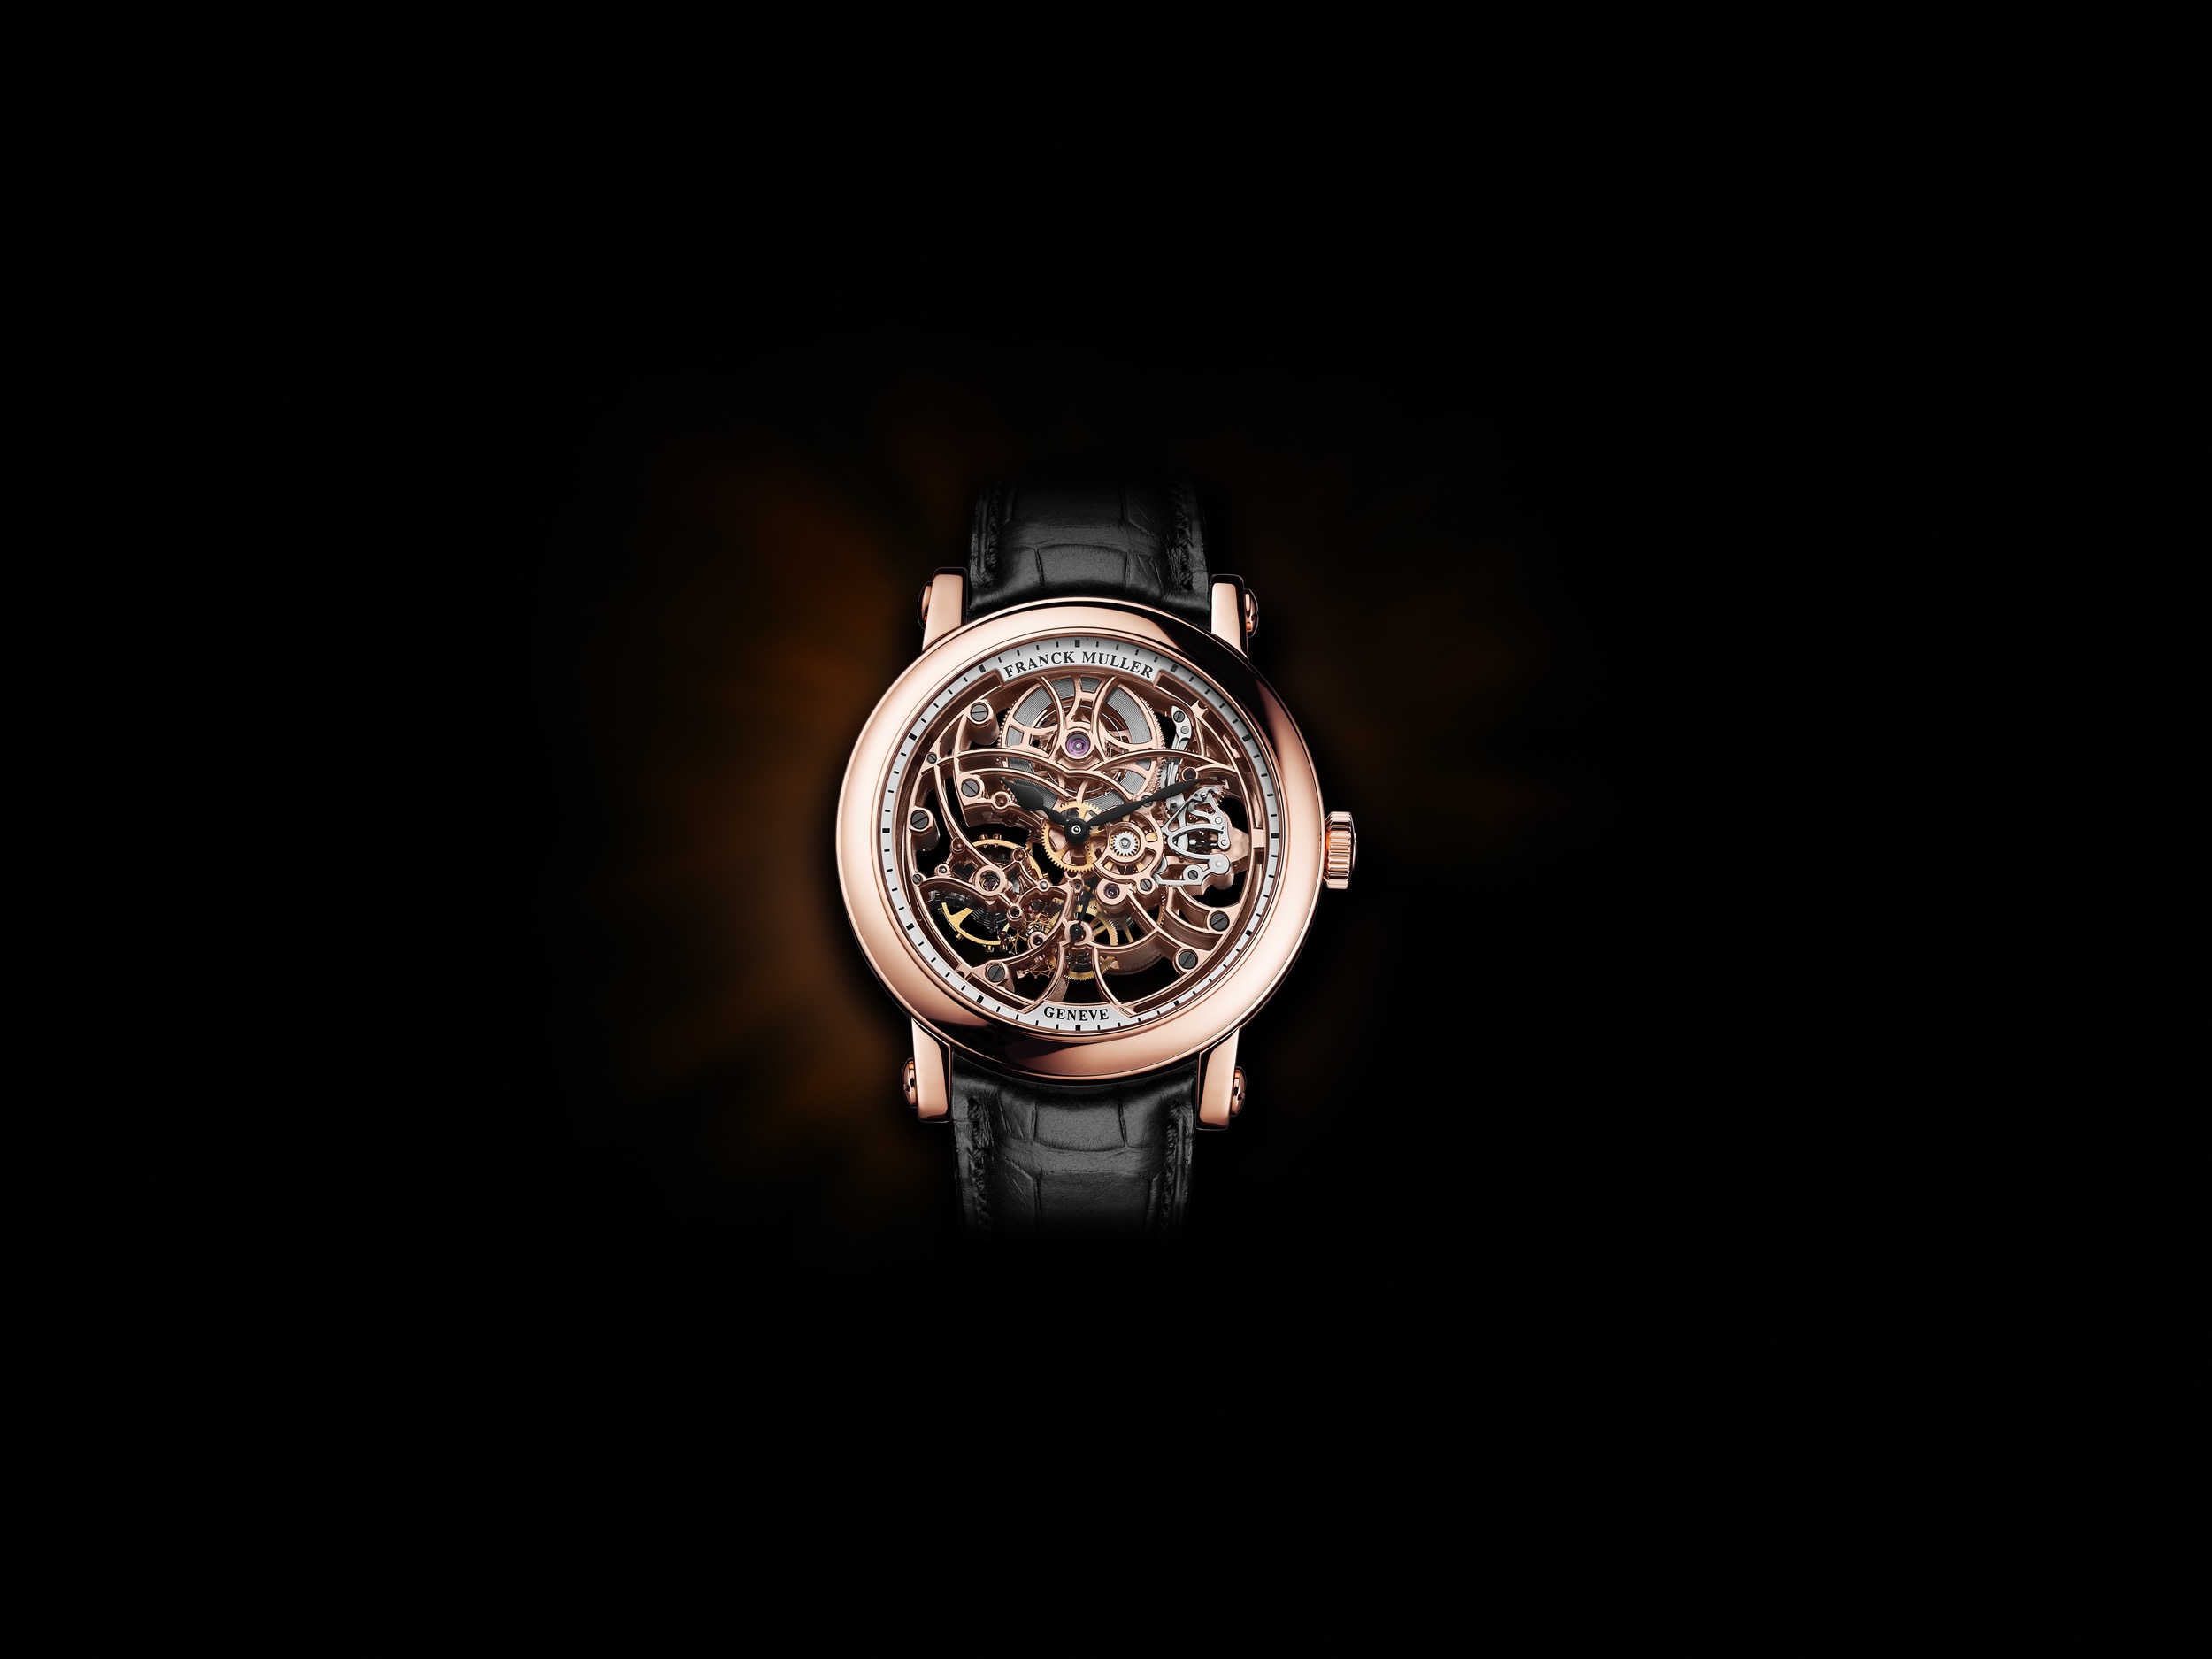 Franck Muller Master Calendar 9880 mc mb 18k White Gold 43mm watch 9880 MC MB